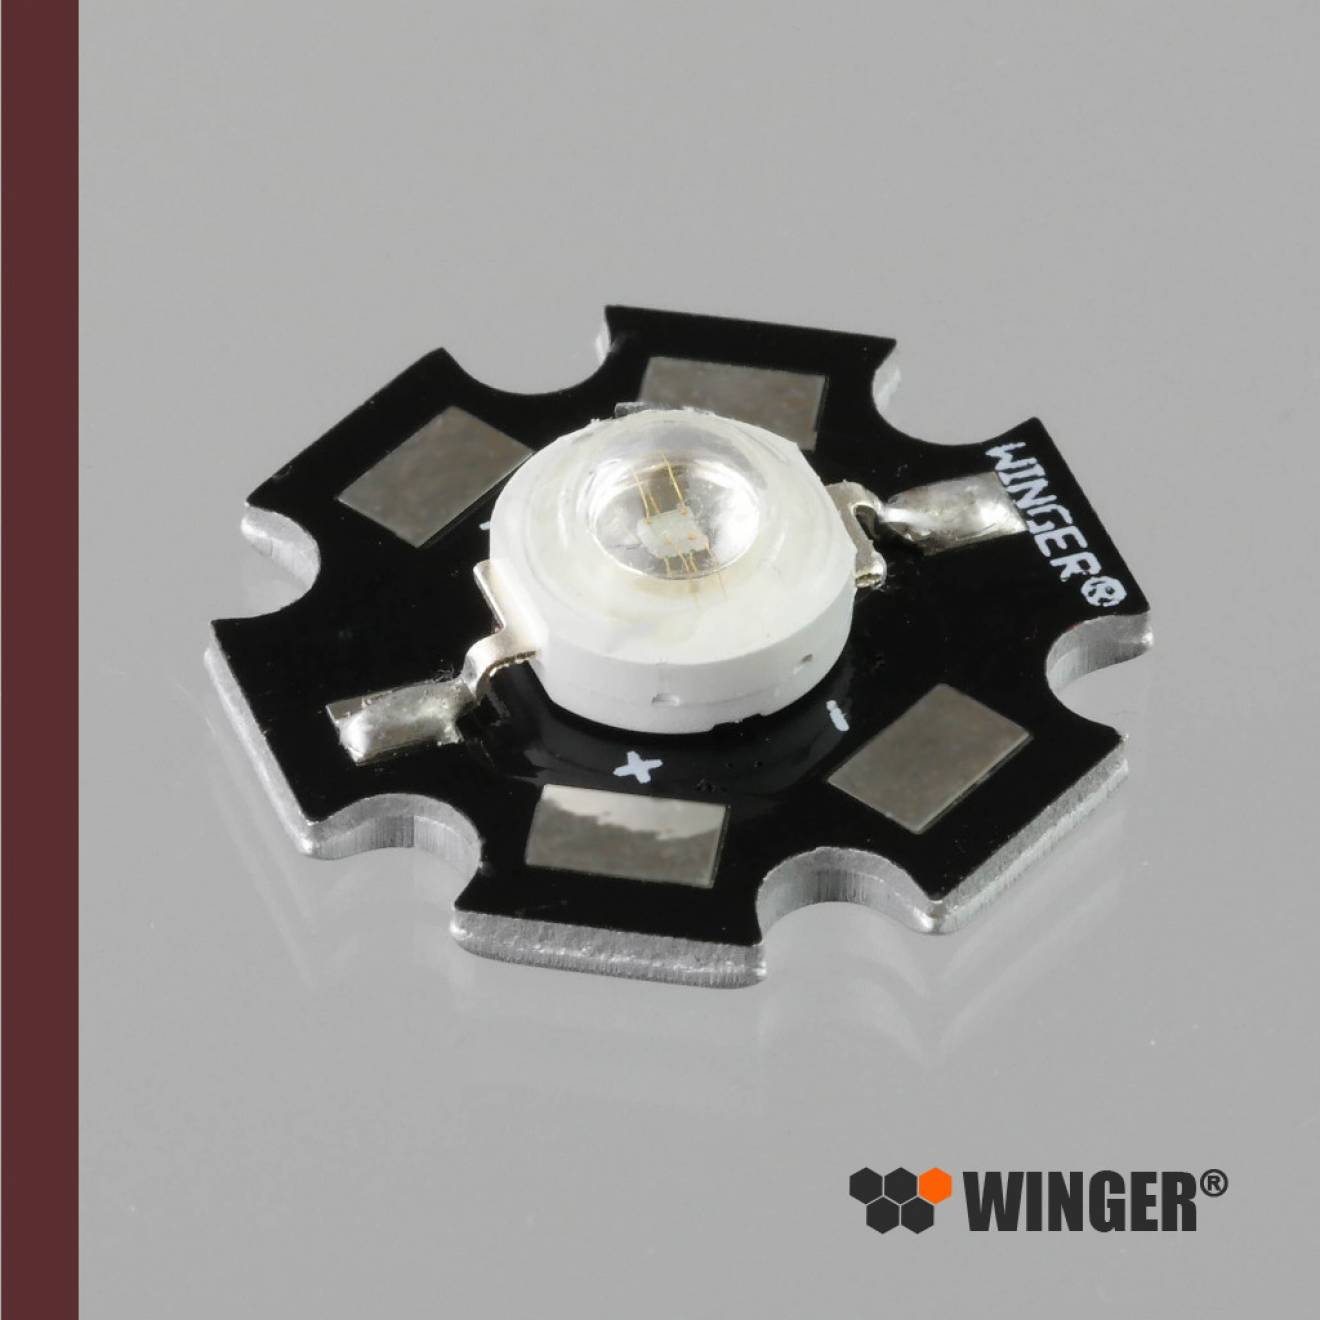 WINGER® WEPIR1-S2 IR Power LED Star infrarot (940nm) 1W